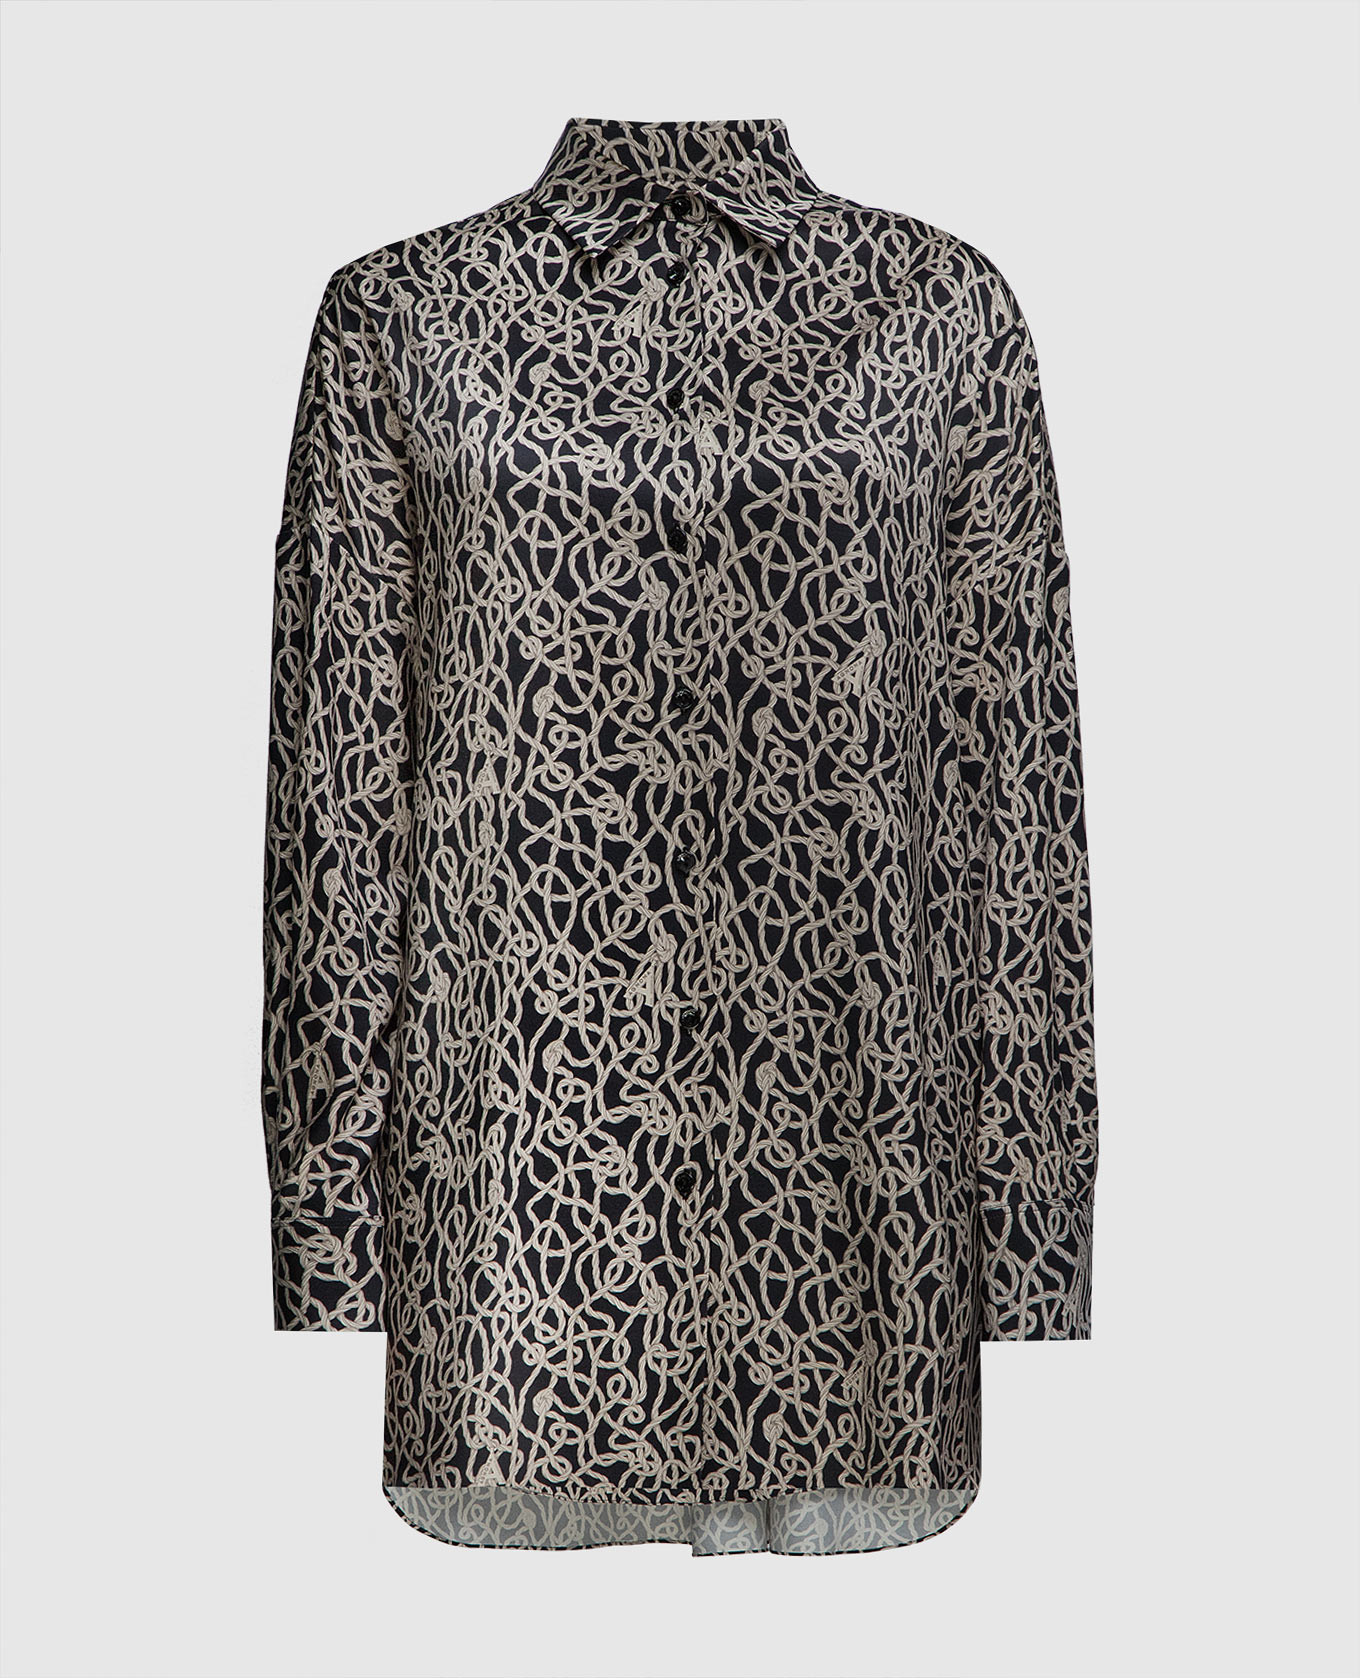 Black silk blouse with Hundred Knots pattern